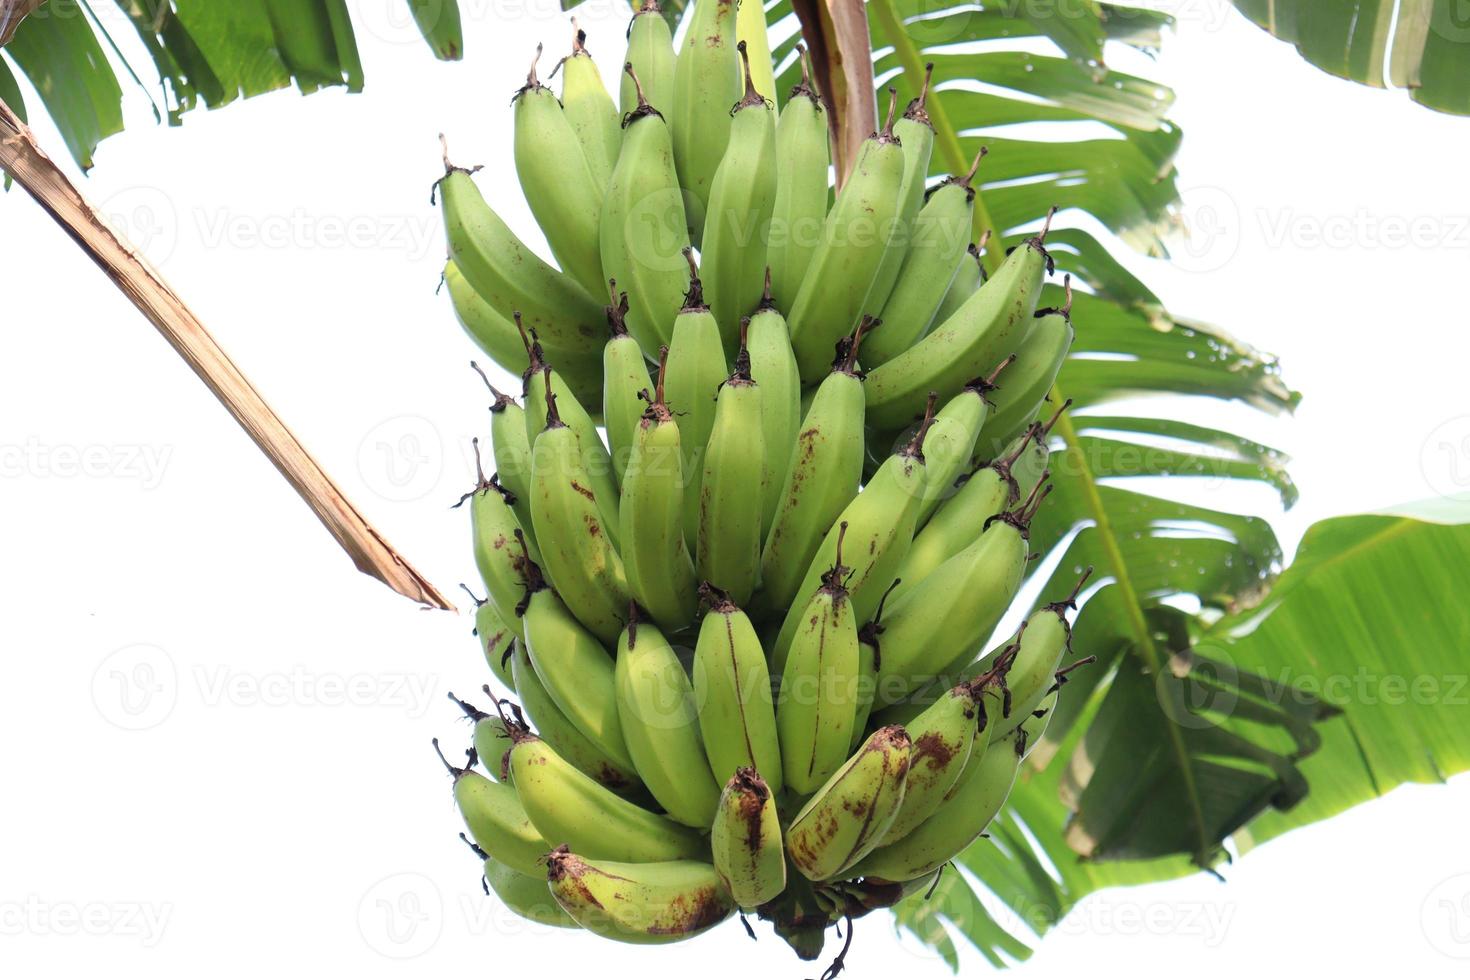 cacho de banana na árvore firme foto